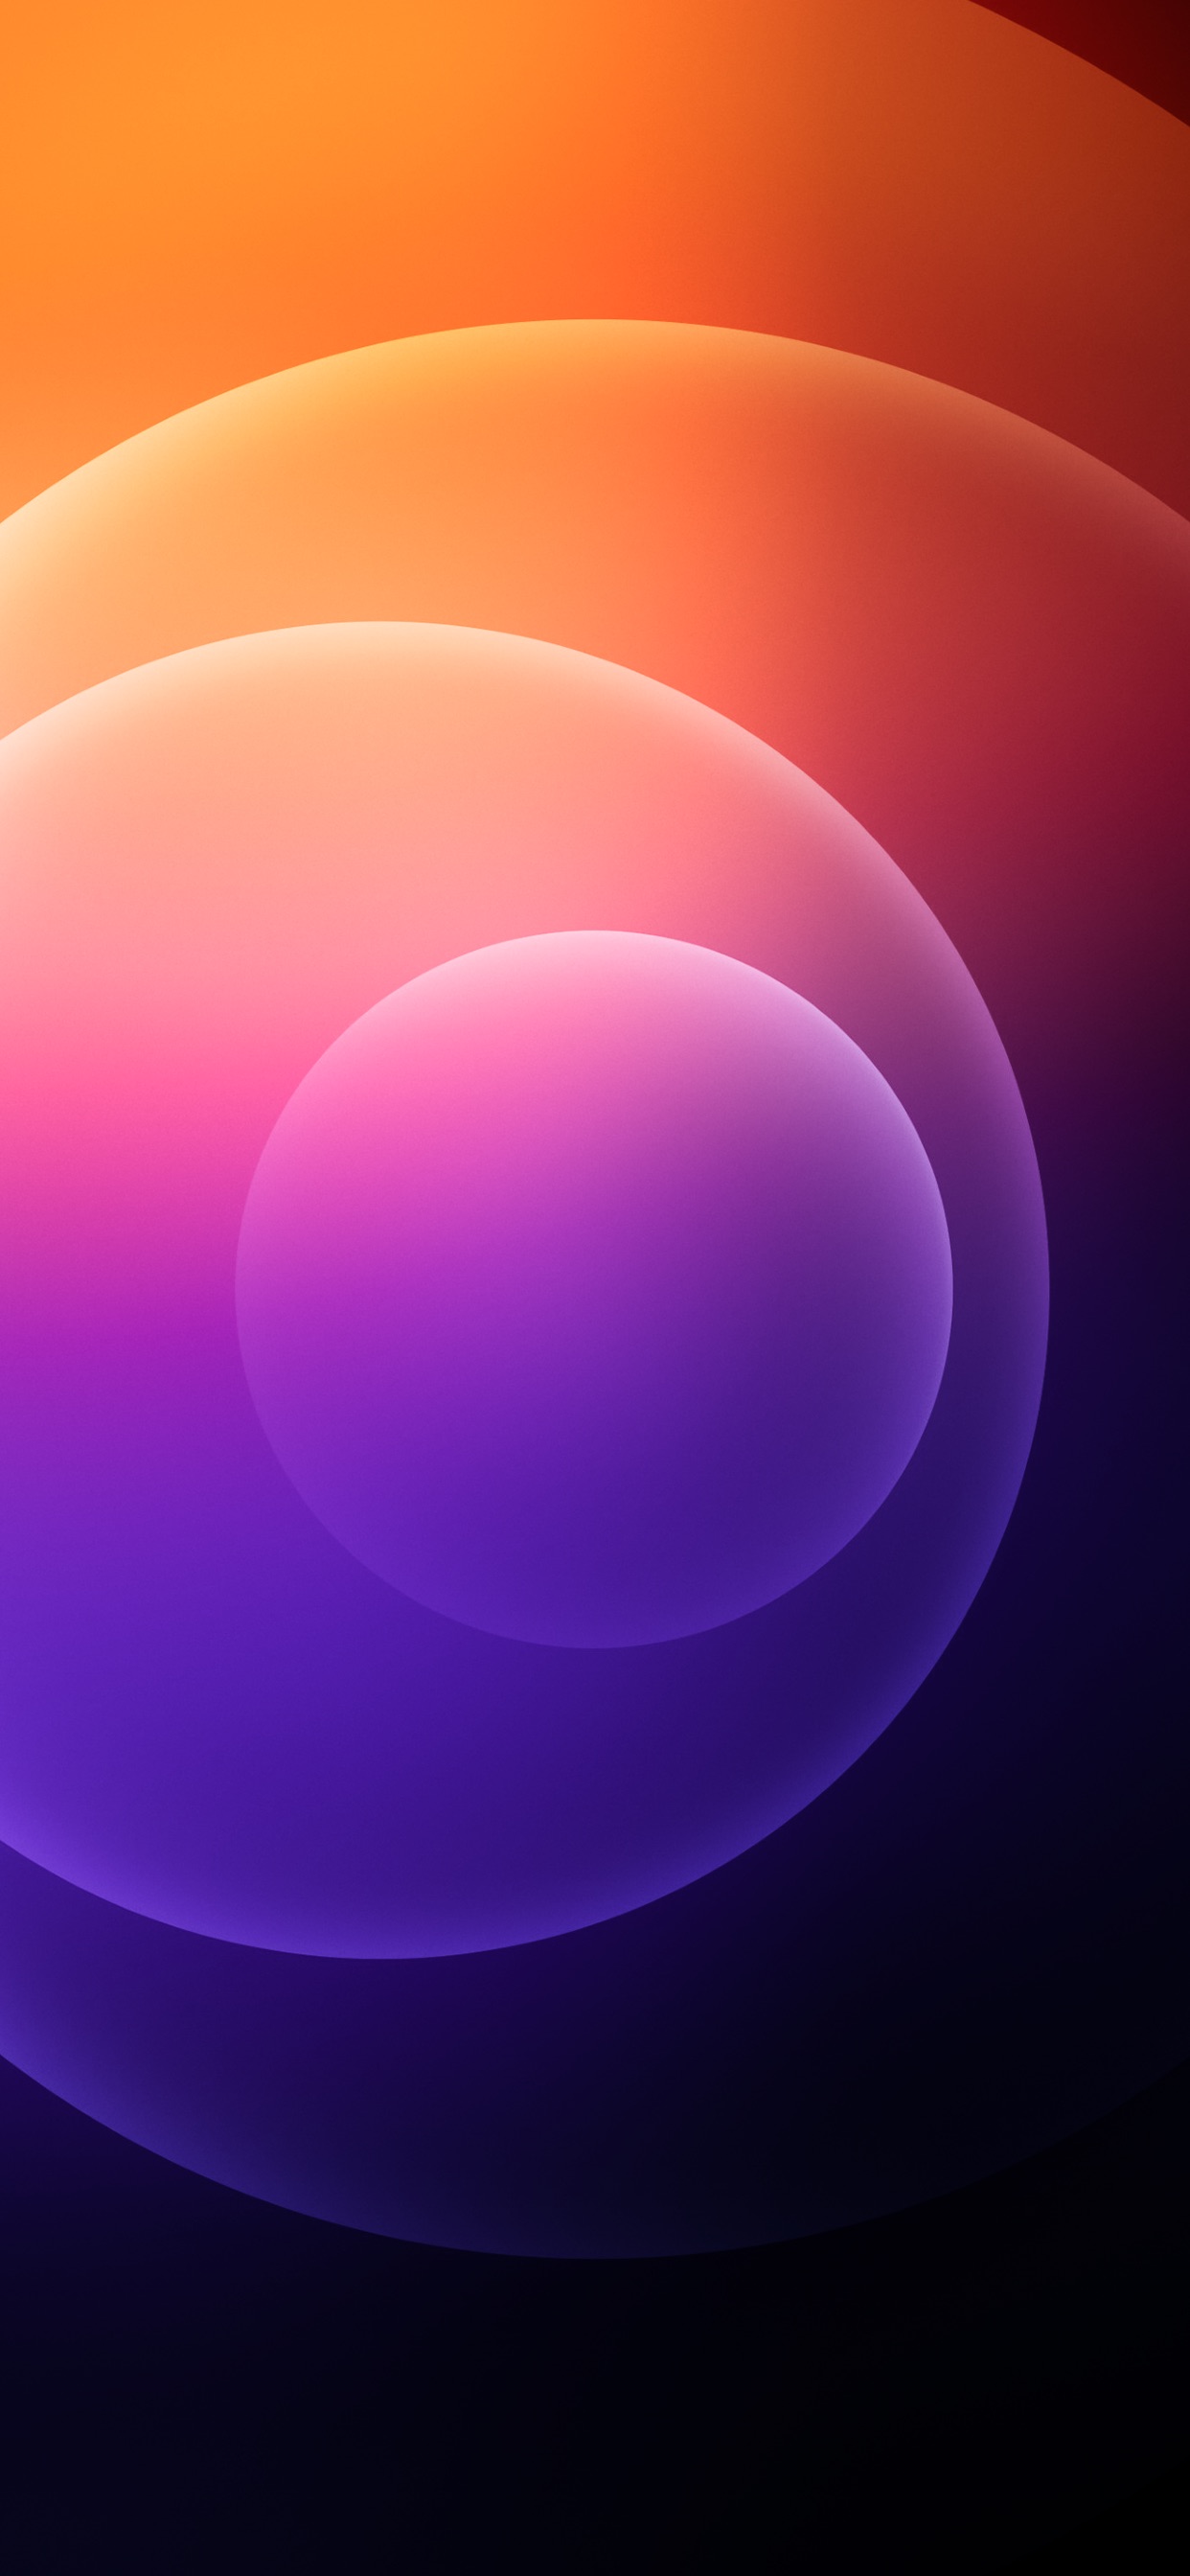 Purple Orange Rings iOS wallpaper for Apple iPhone, Mac, iPad and more